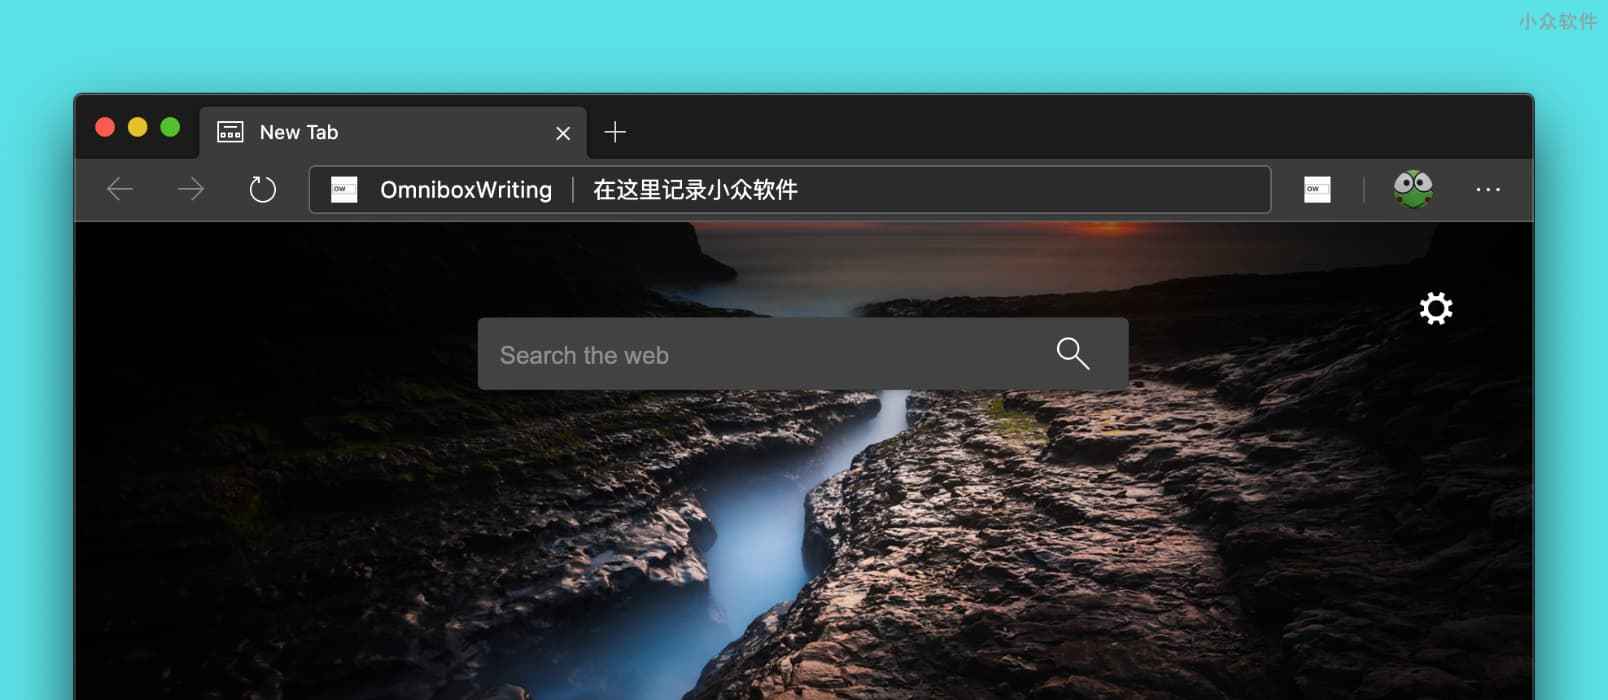 OmniboxWriting – 思路清奇，在 Chrome 地址栏记录临时笔记、便签